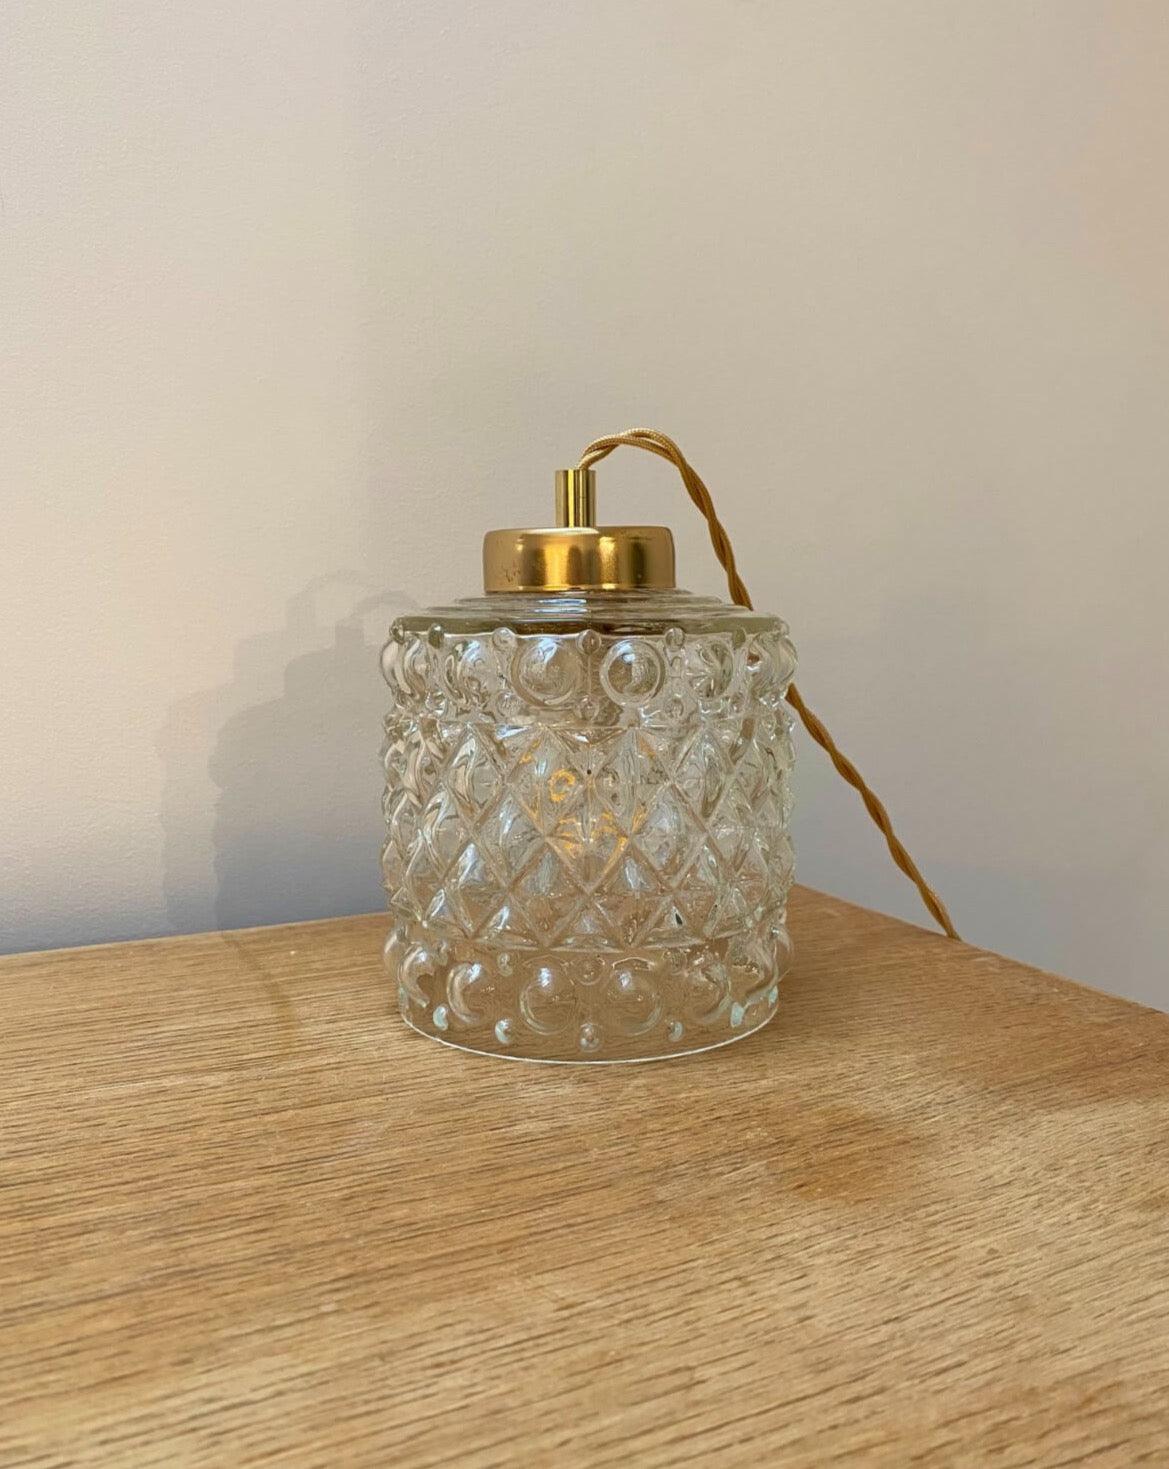 Paulette, la lampe baladeuse N°35 – Debongout